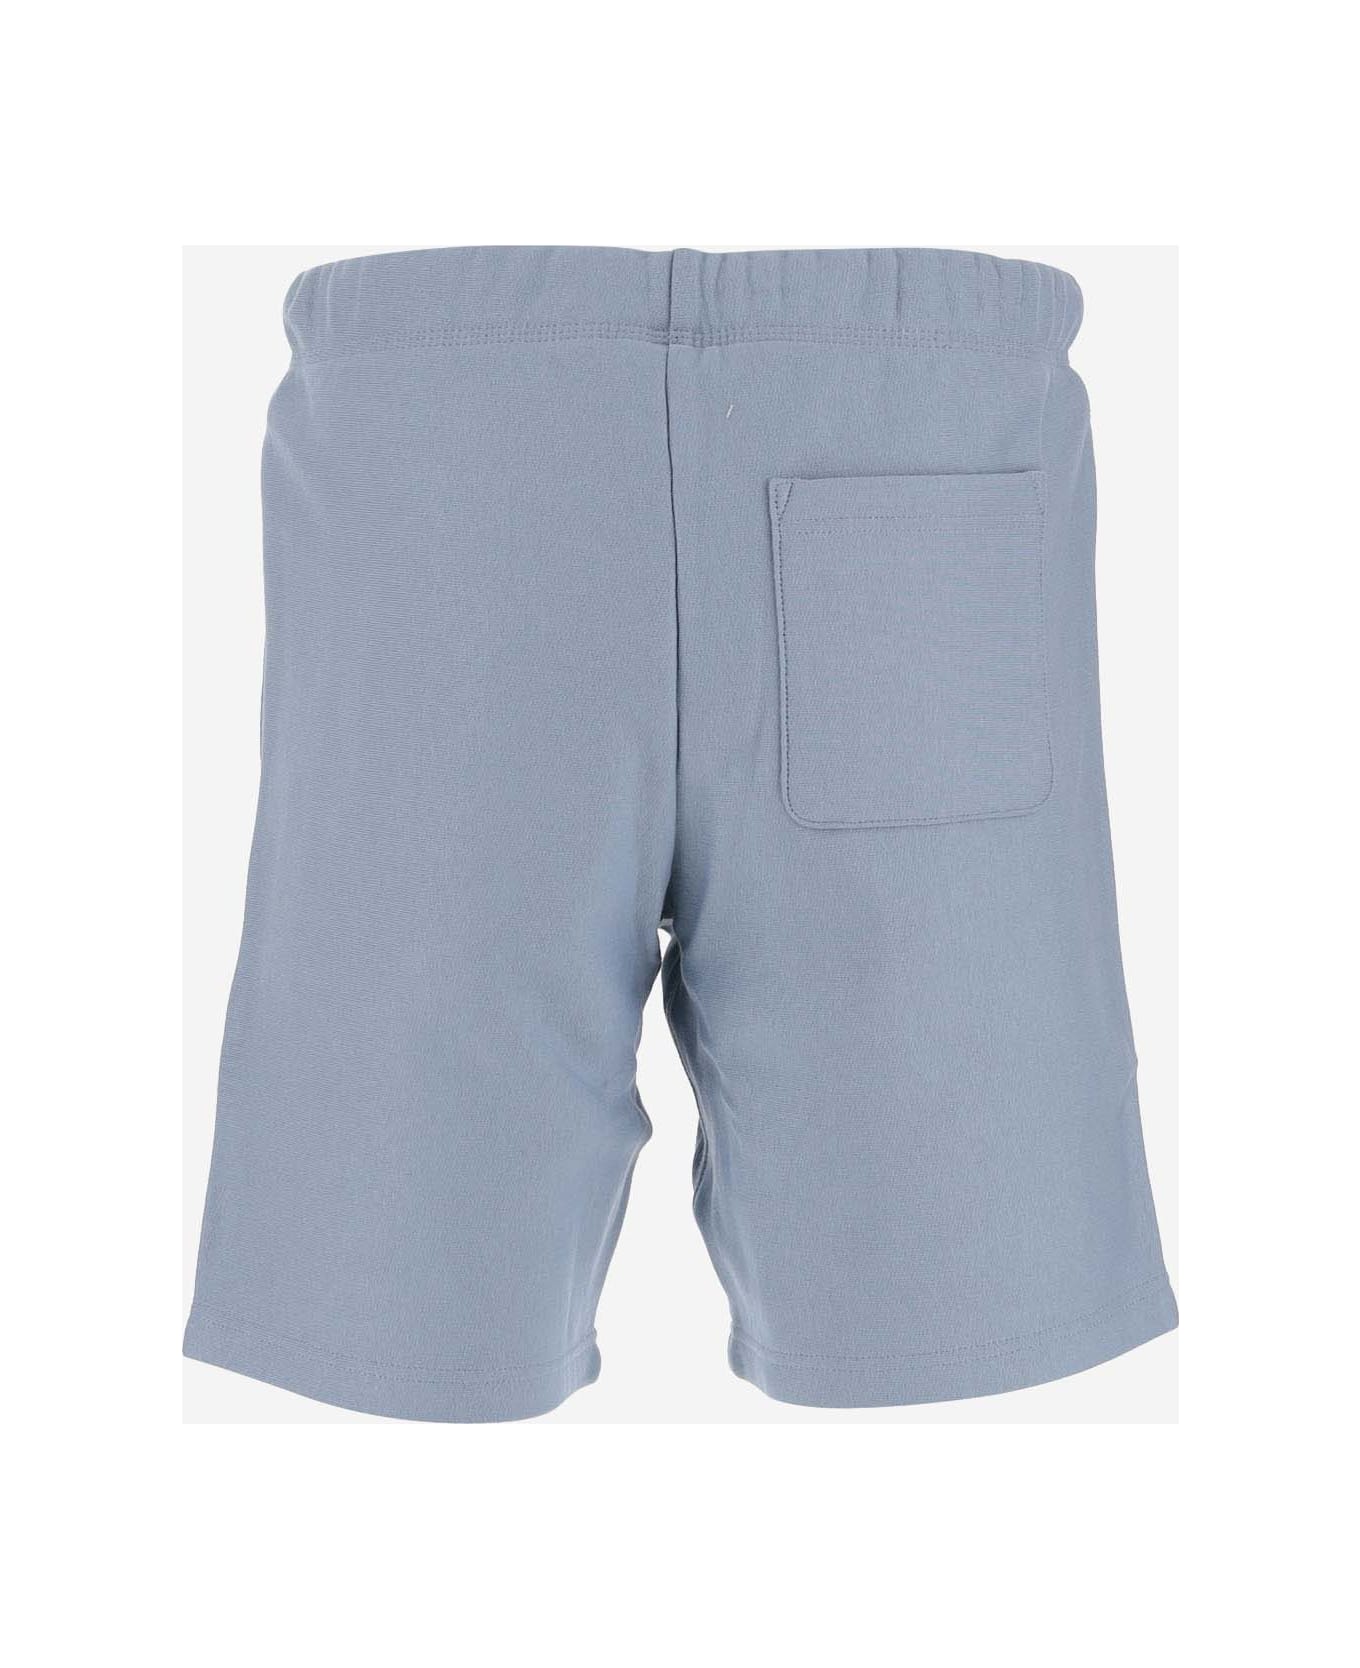 Carhartt Cotton Short Pants With Logo - Blue